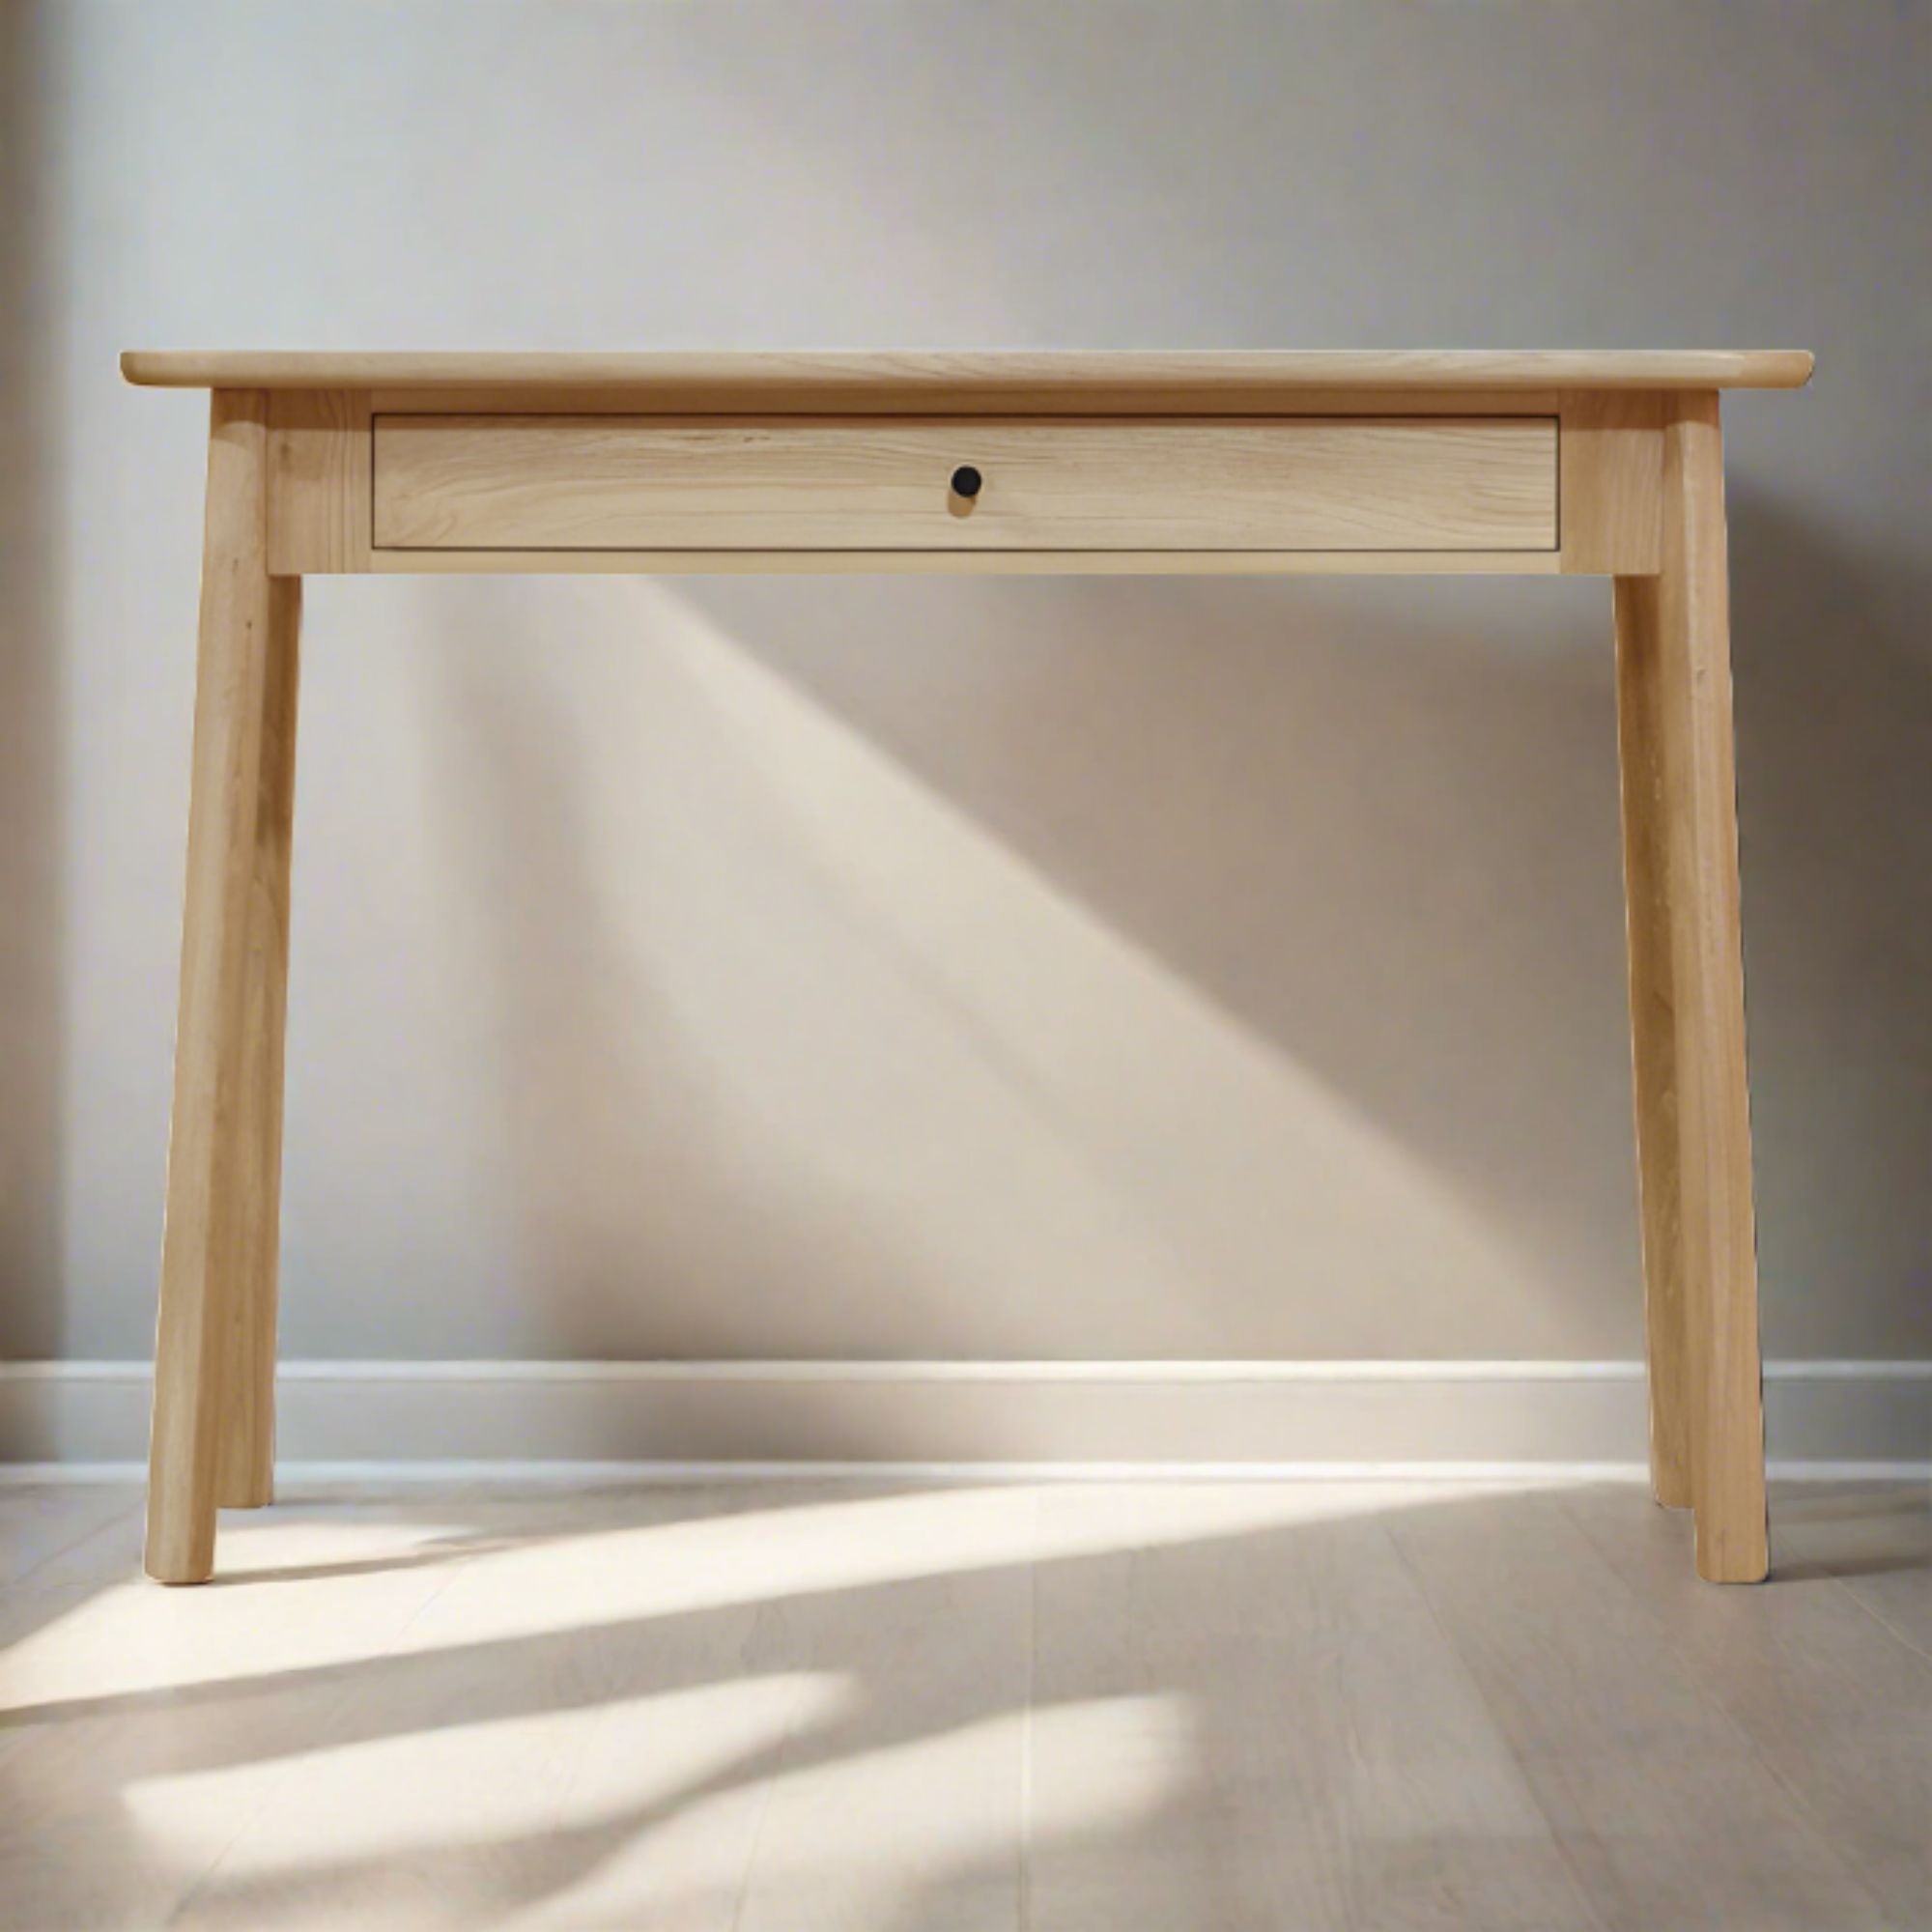 Alfie handmade European oak dressing table with one drawer | malletandplane.com